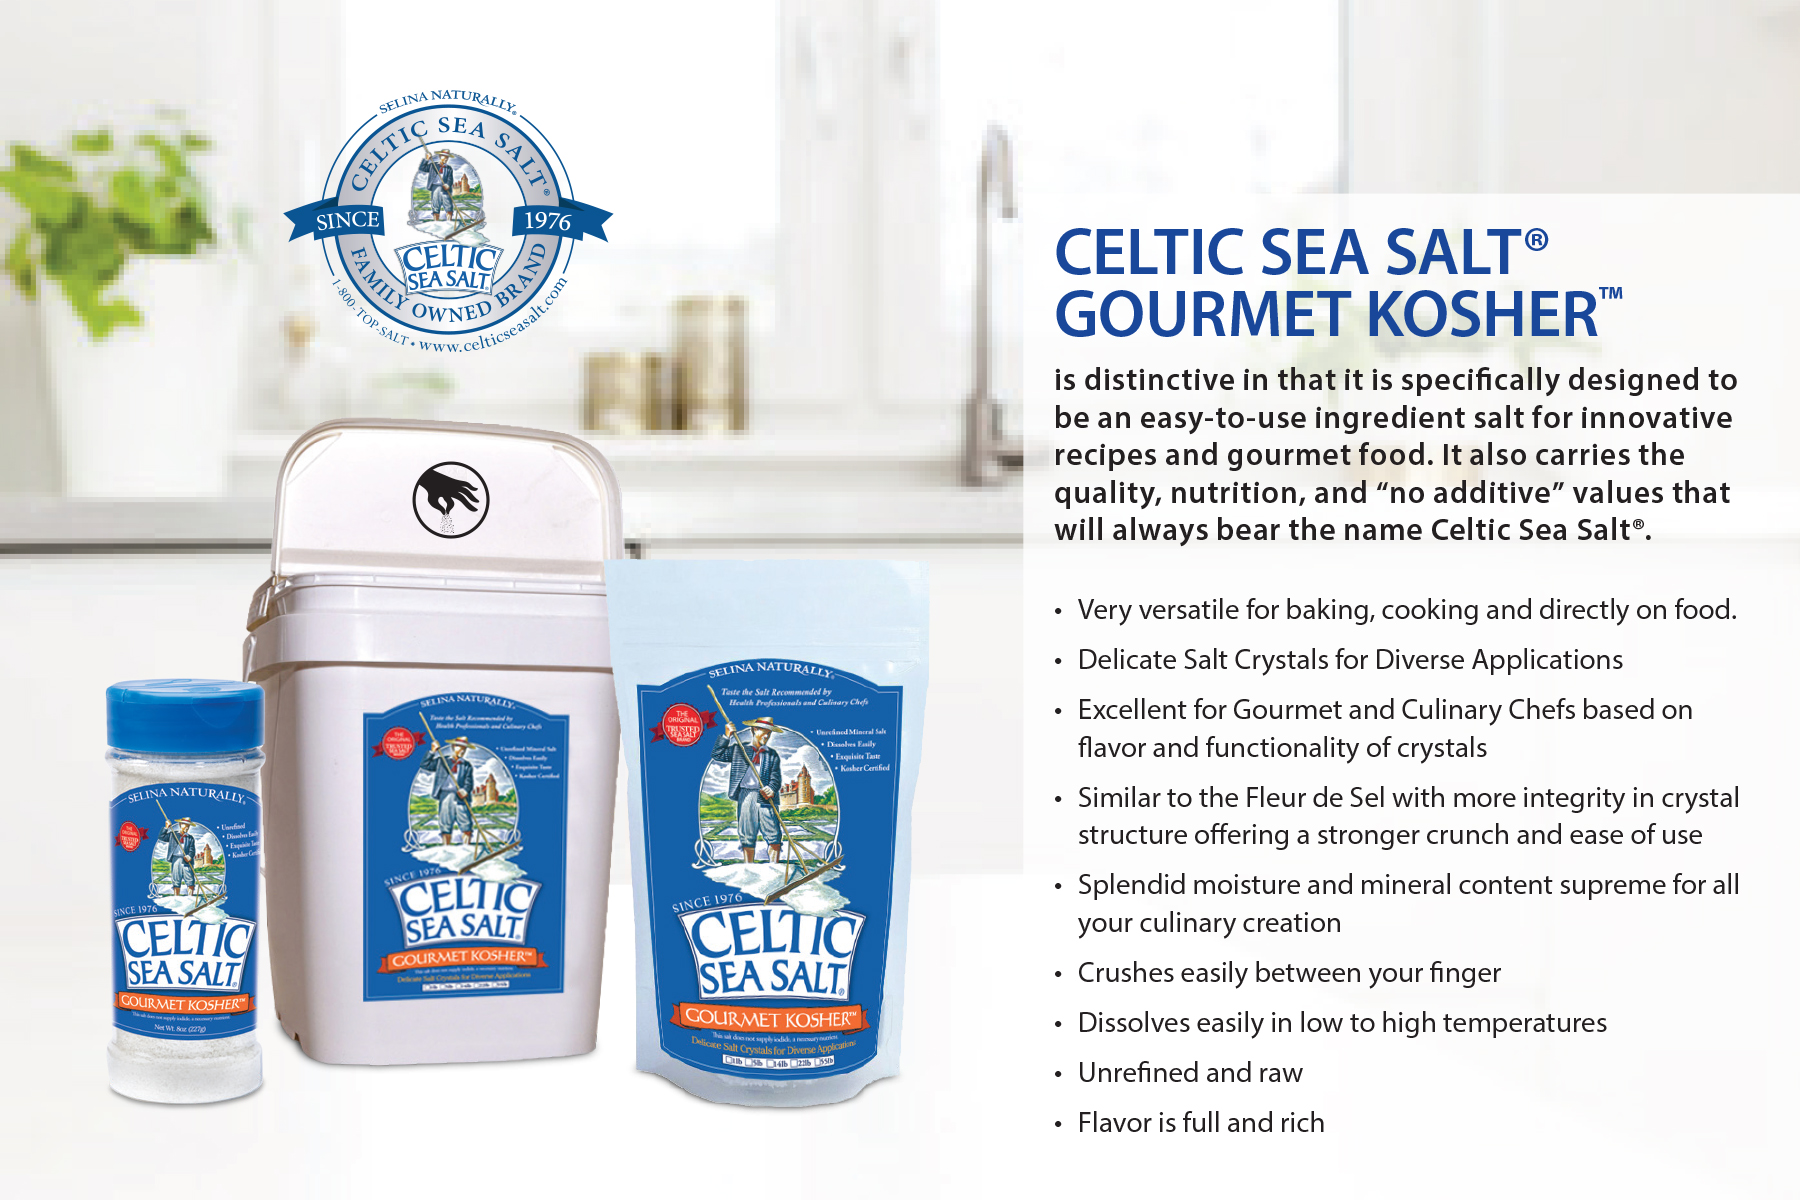 Chef's Gourmet Kosher Celtic Sea Salt®